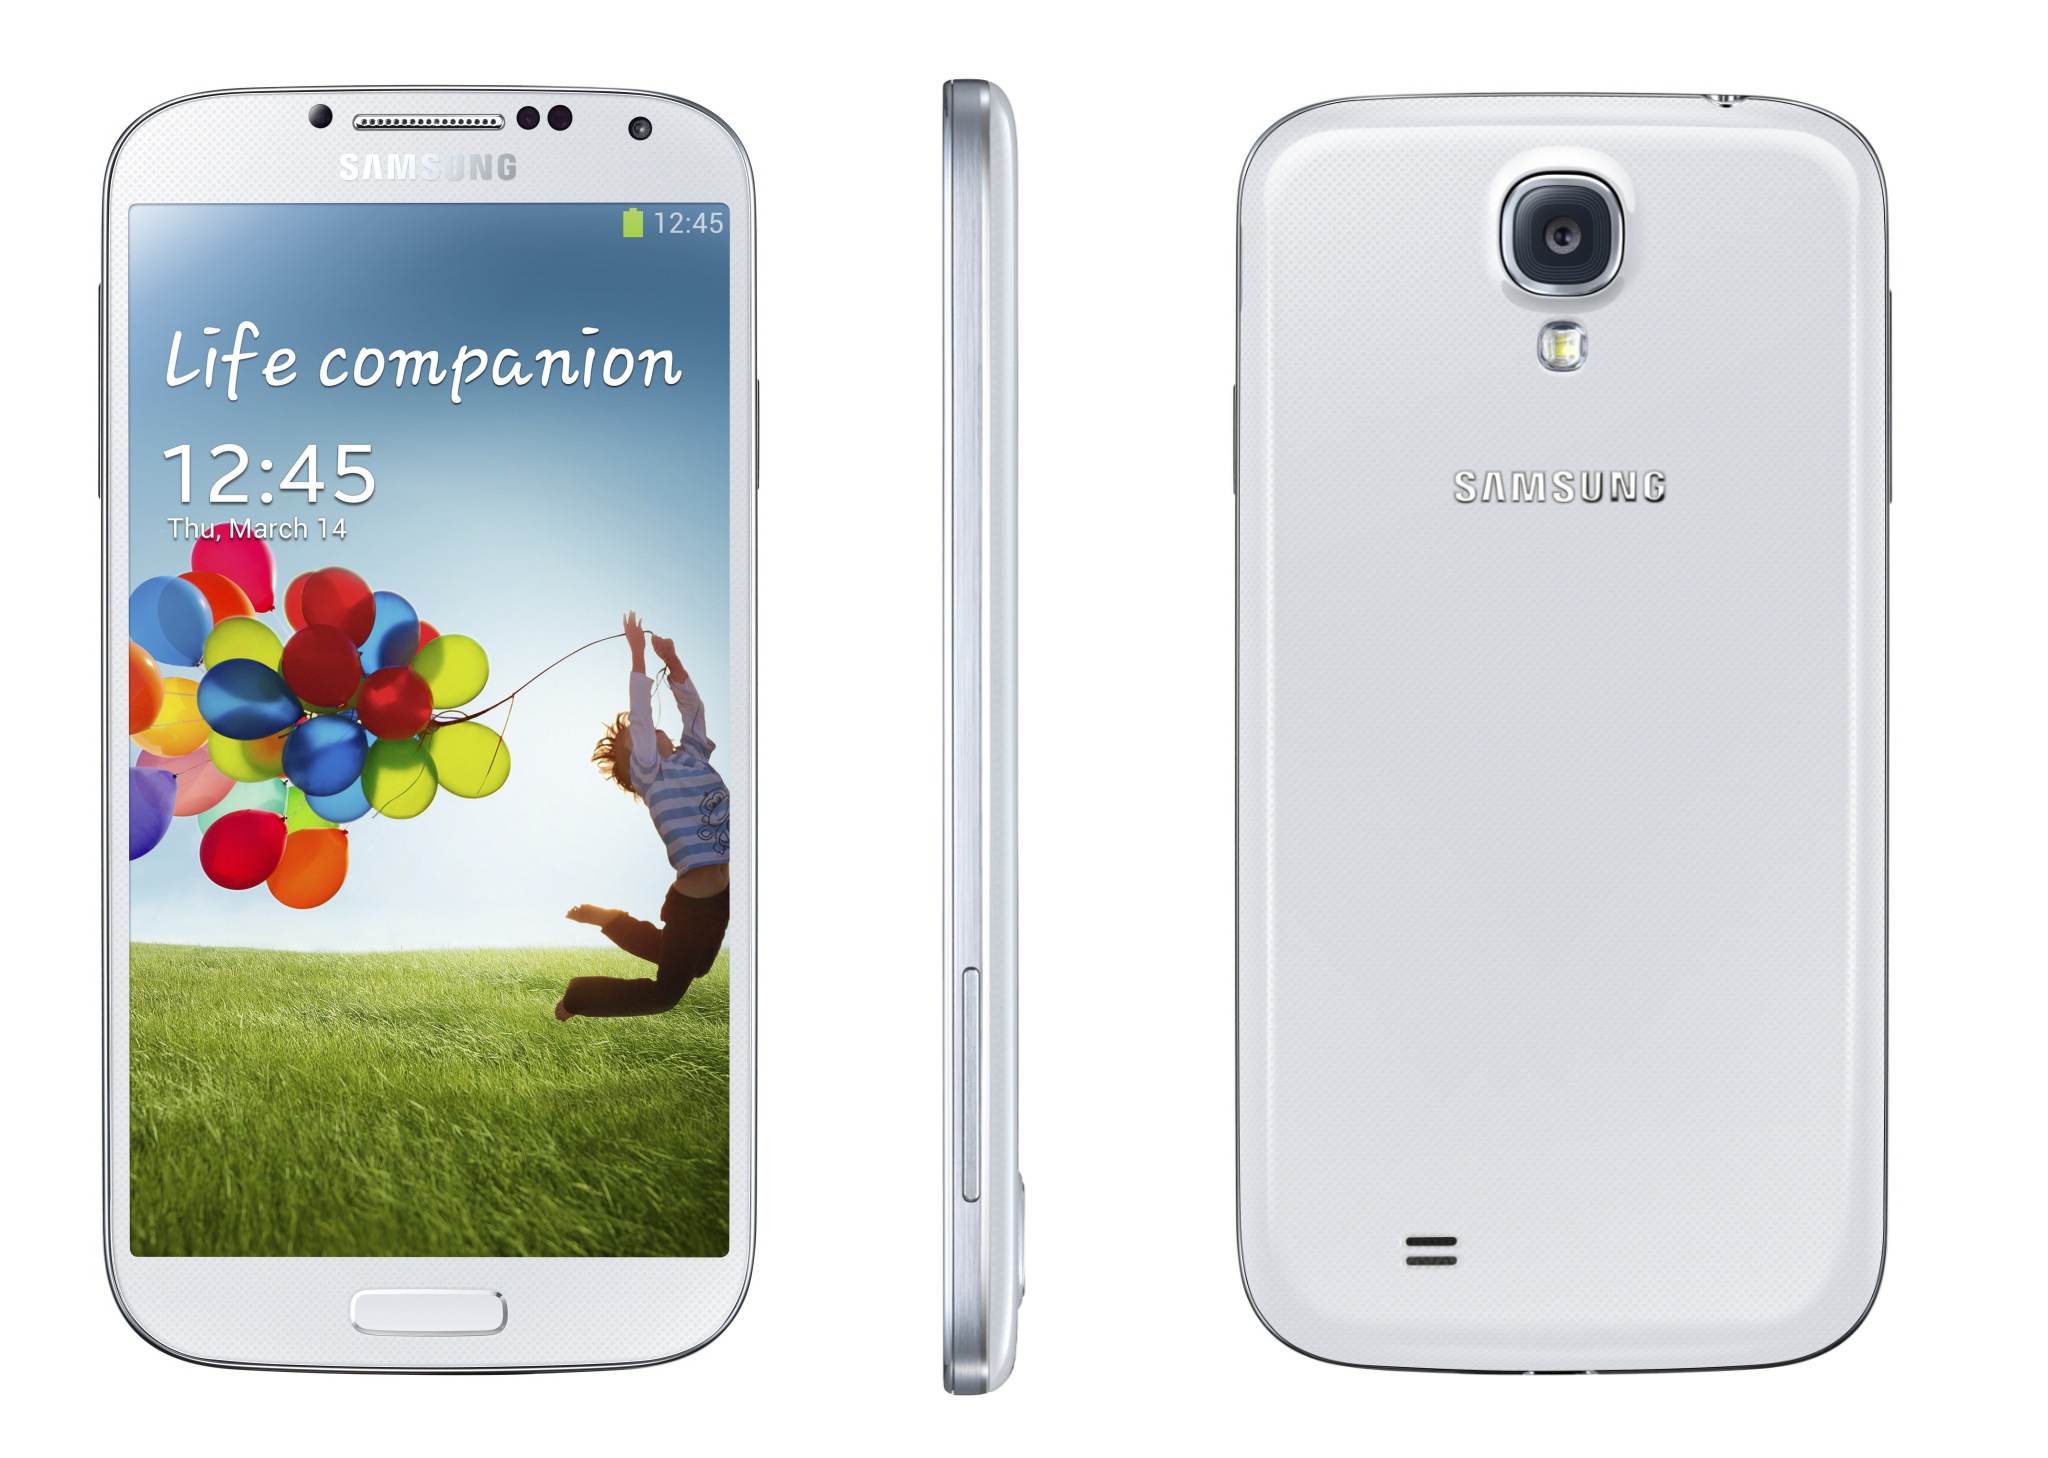 Samsung-Galaxy-S-4-white-three-up-front-profile-back.jpg